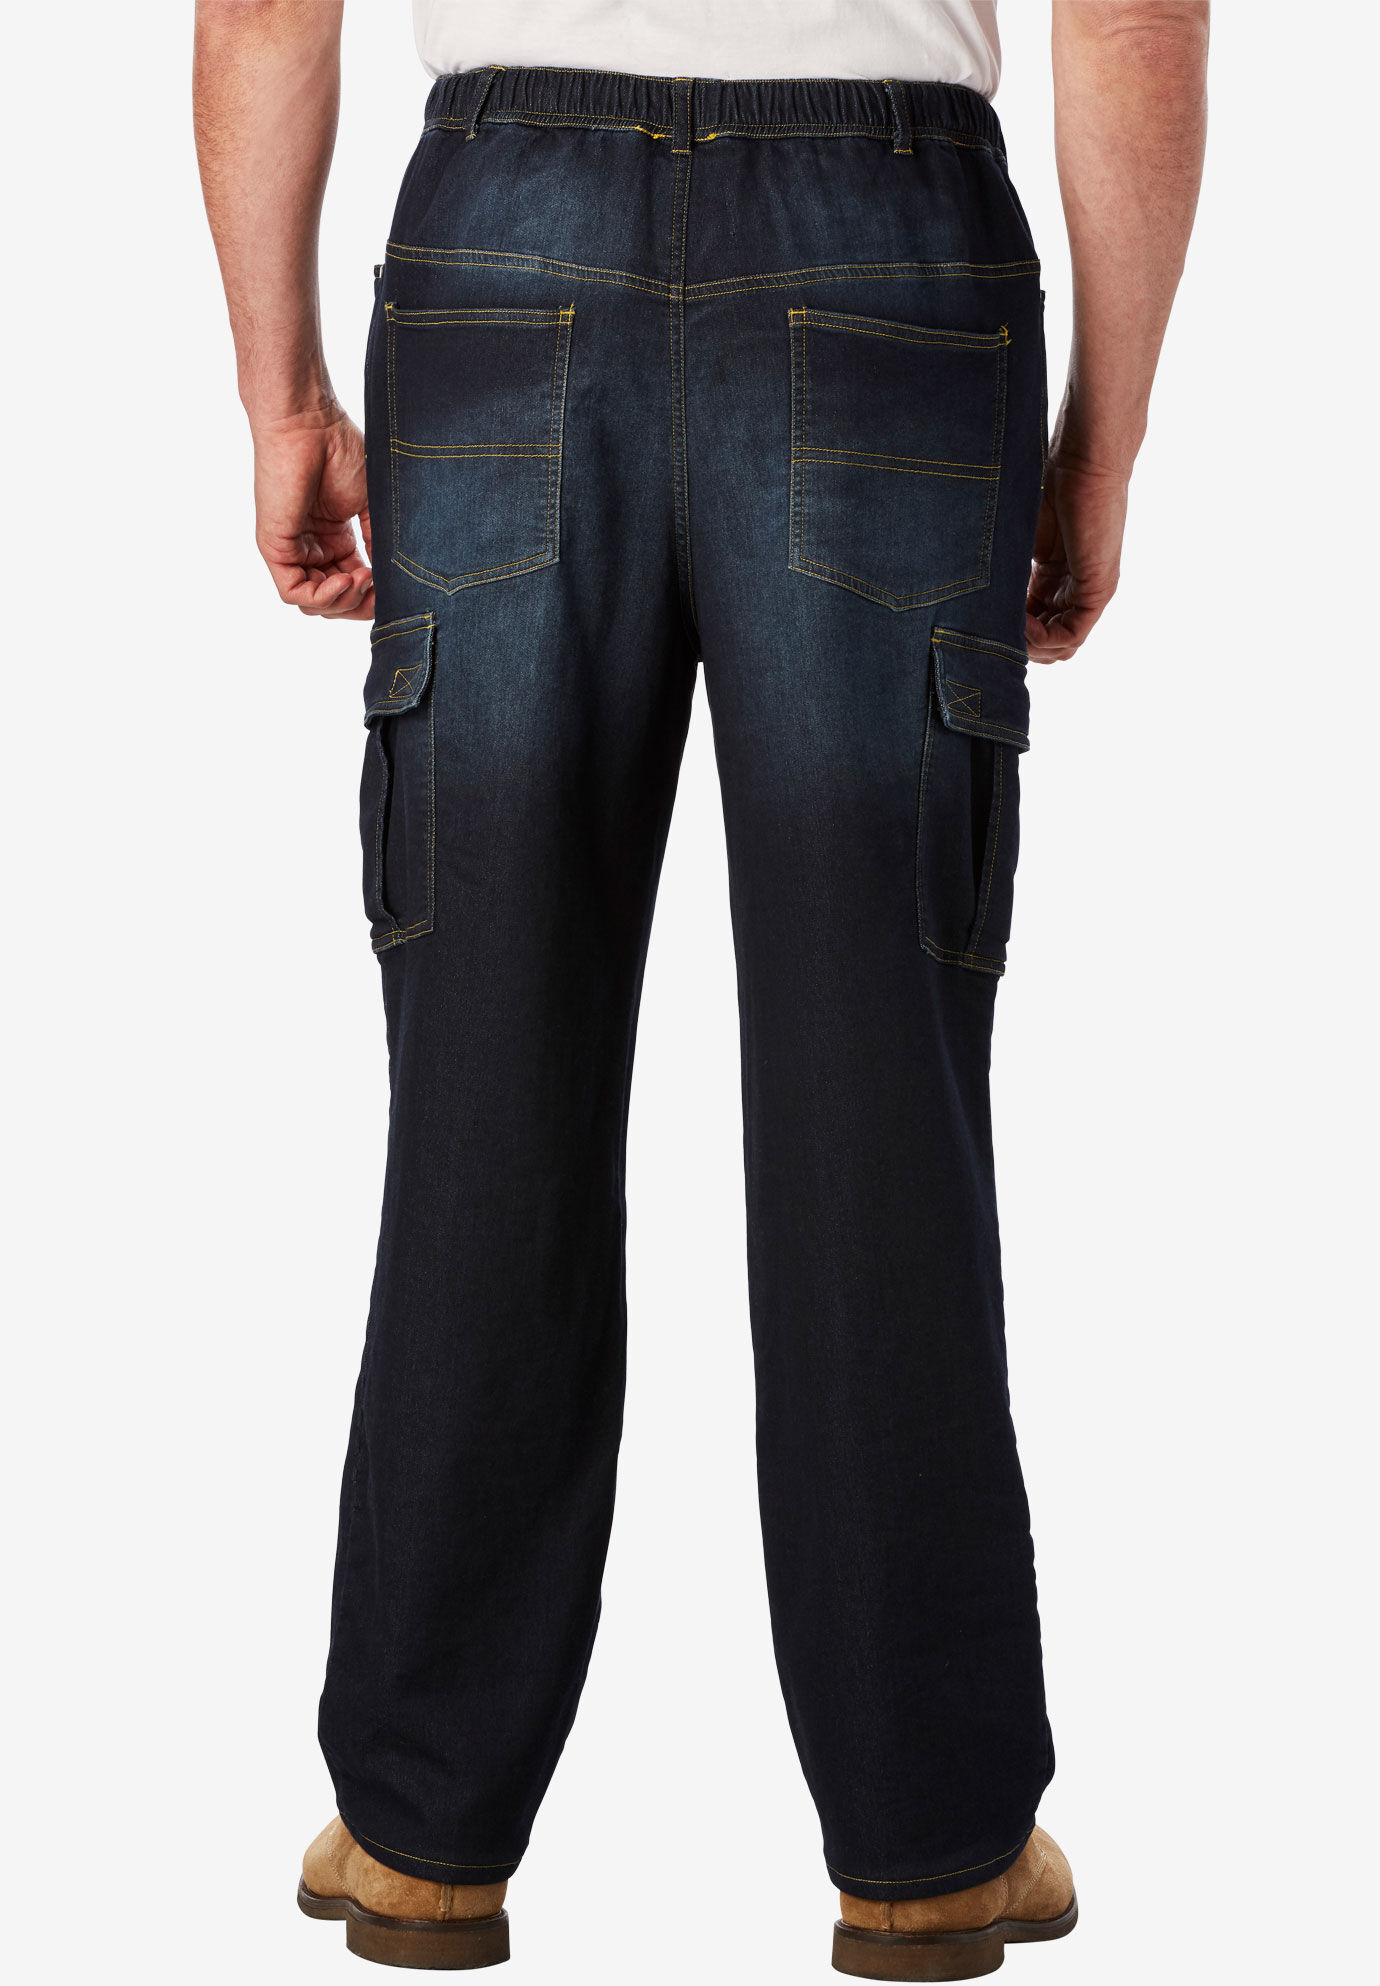 sweatpants who look like jeans｜TikTok Search